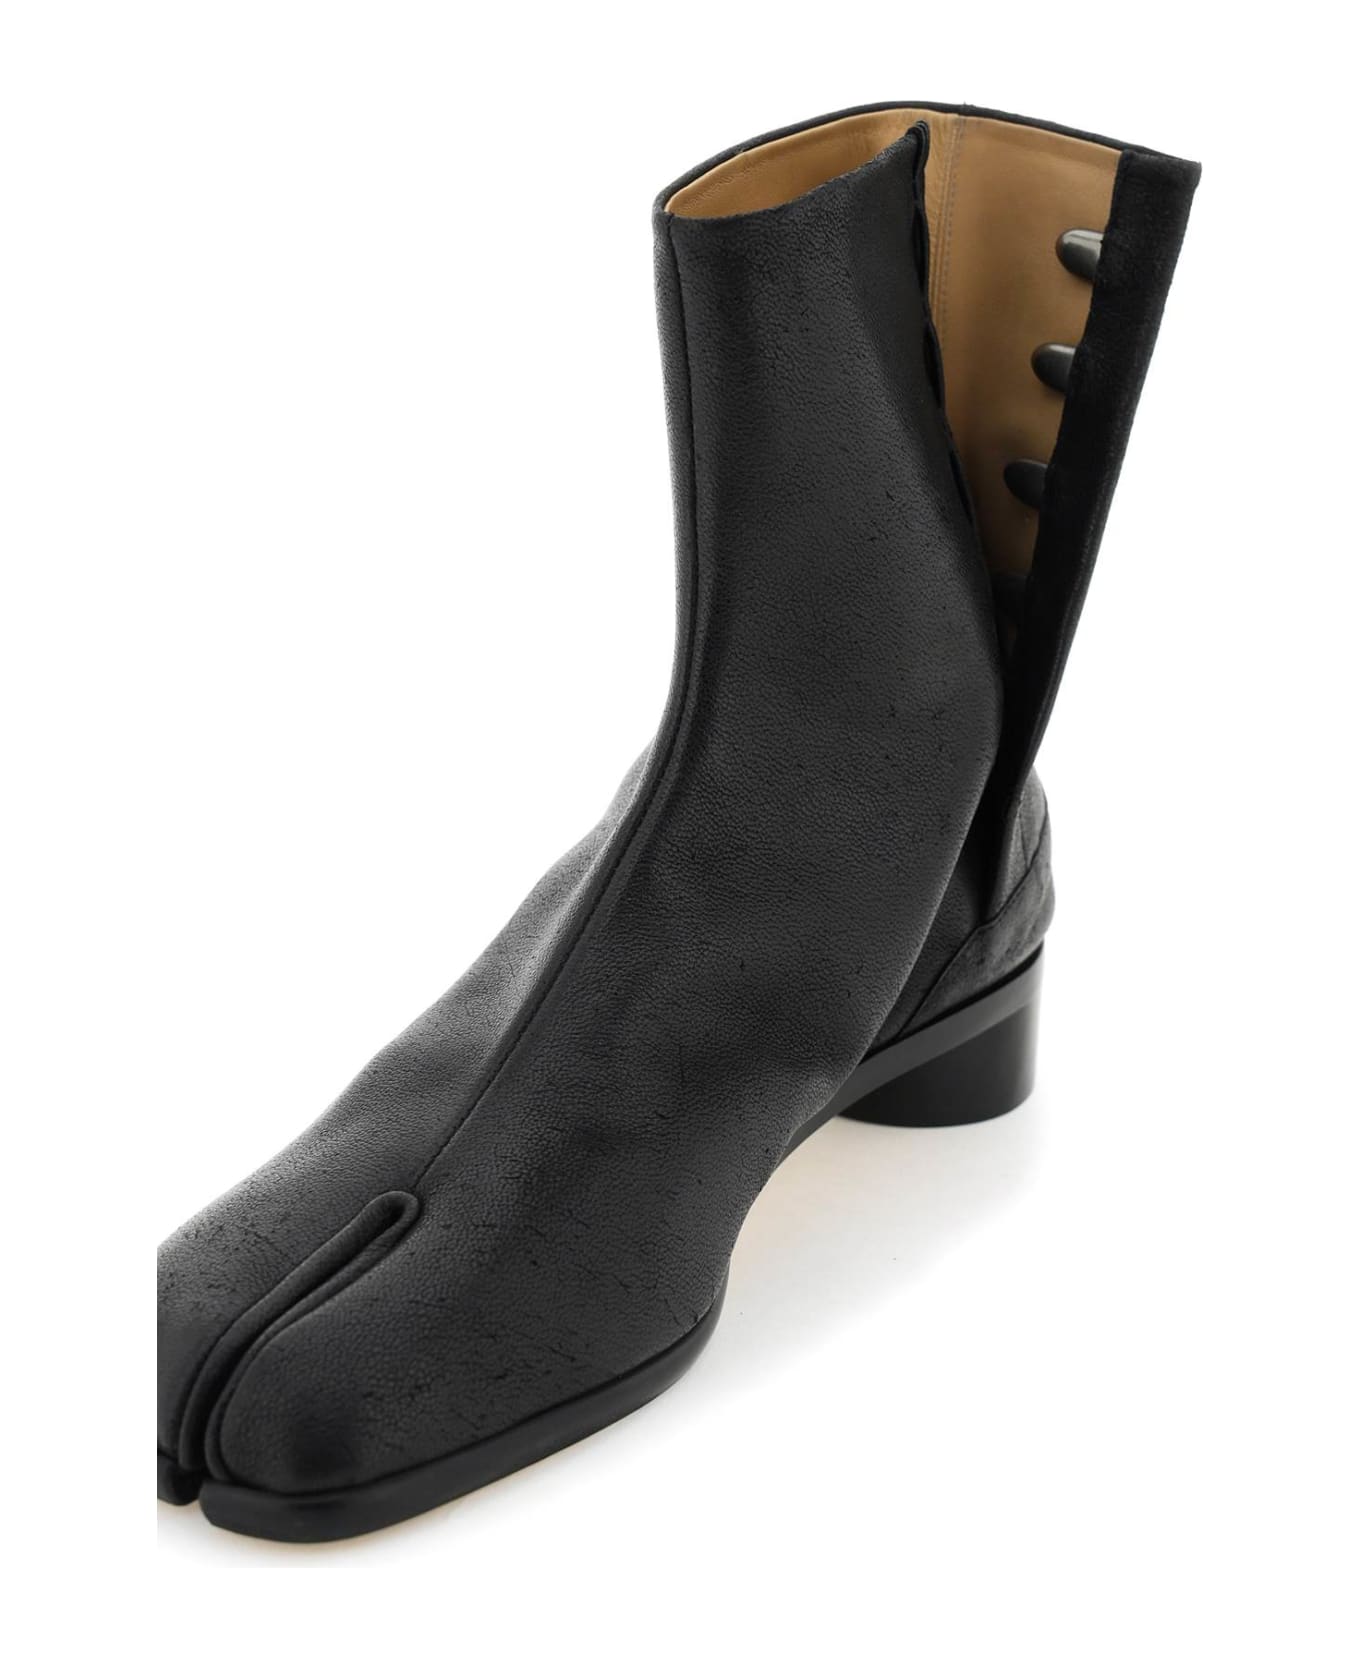 Maison Margiela Tabi Ankle Boots - Black